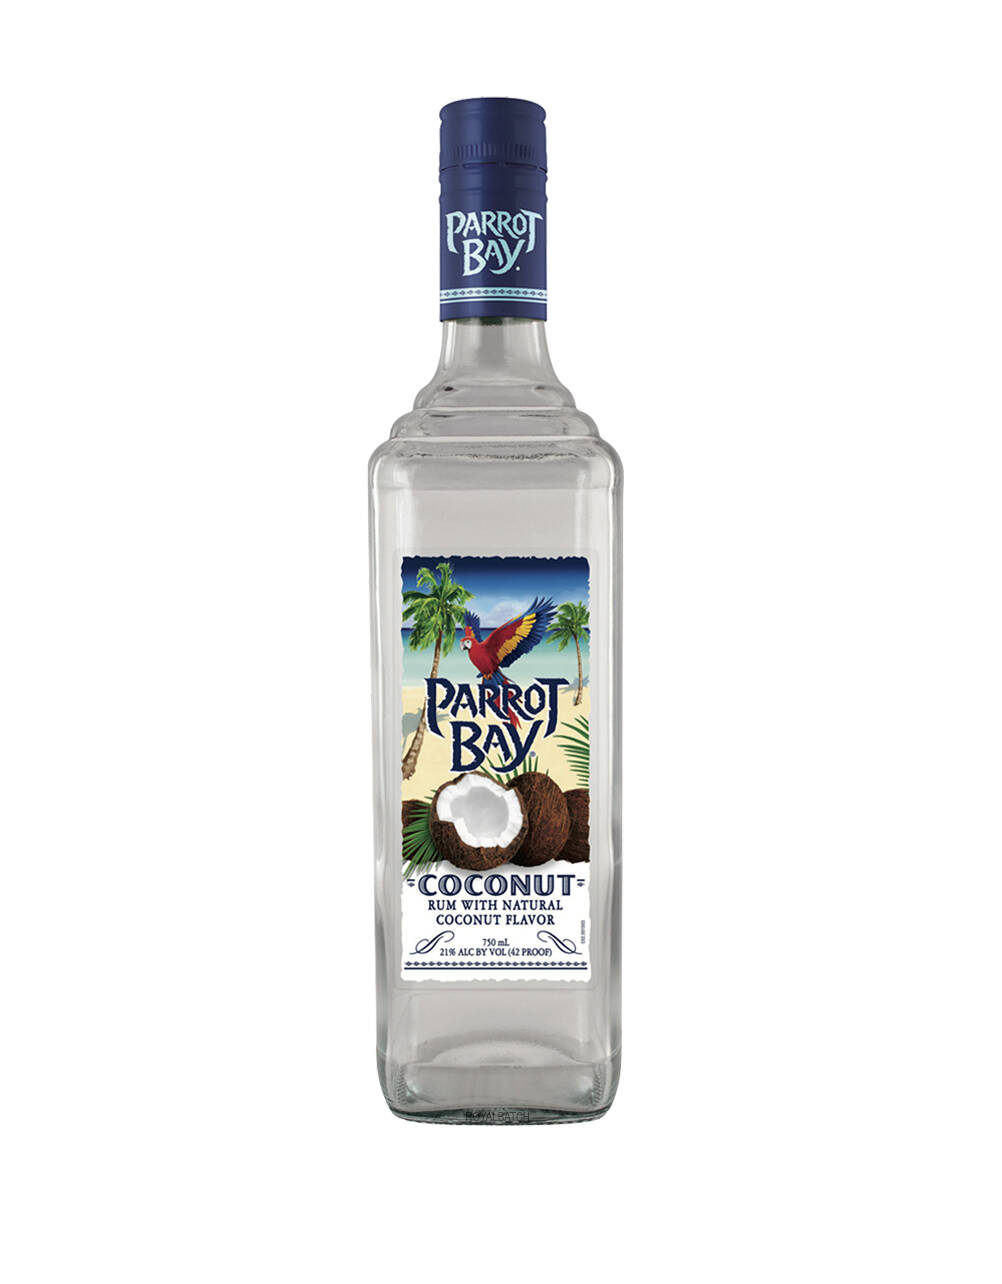 Parrot Bay Coconut Flavored Rum